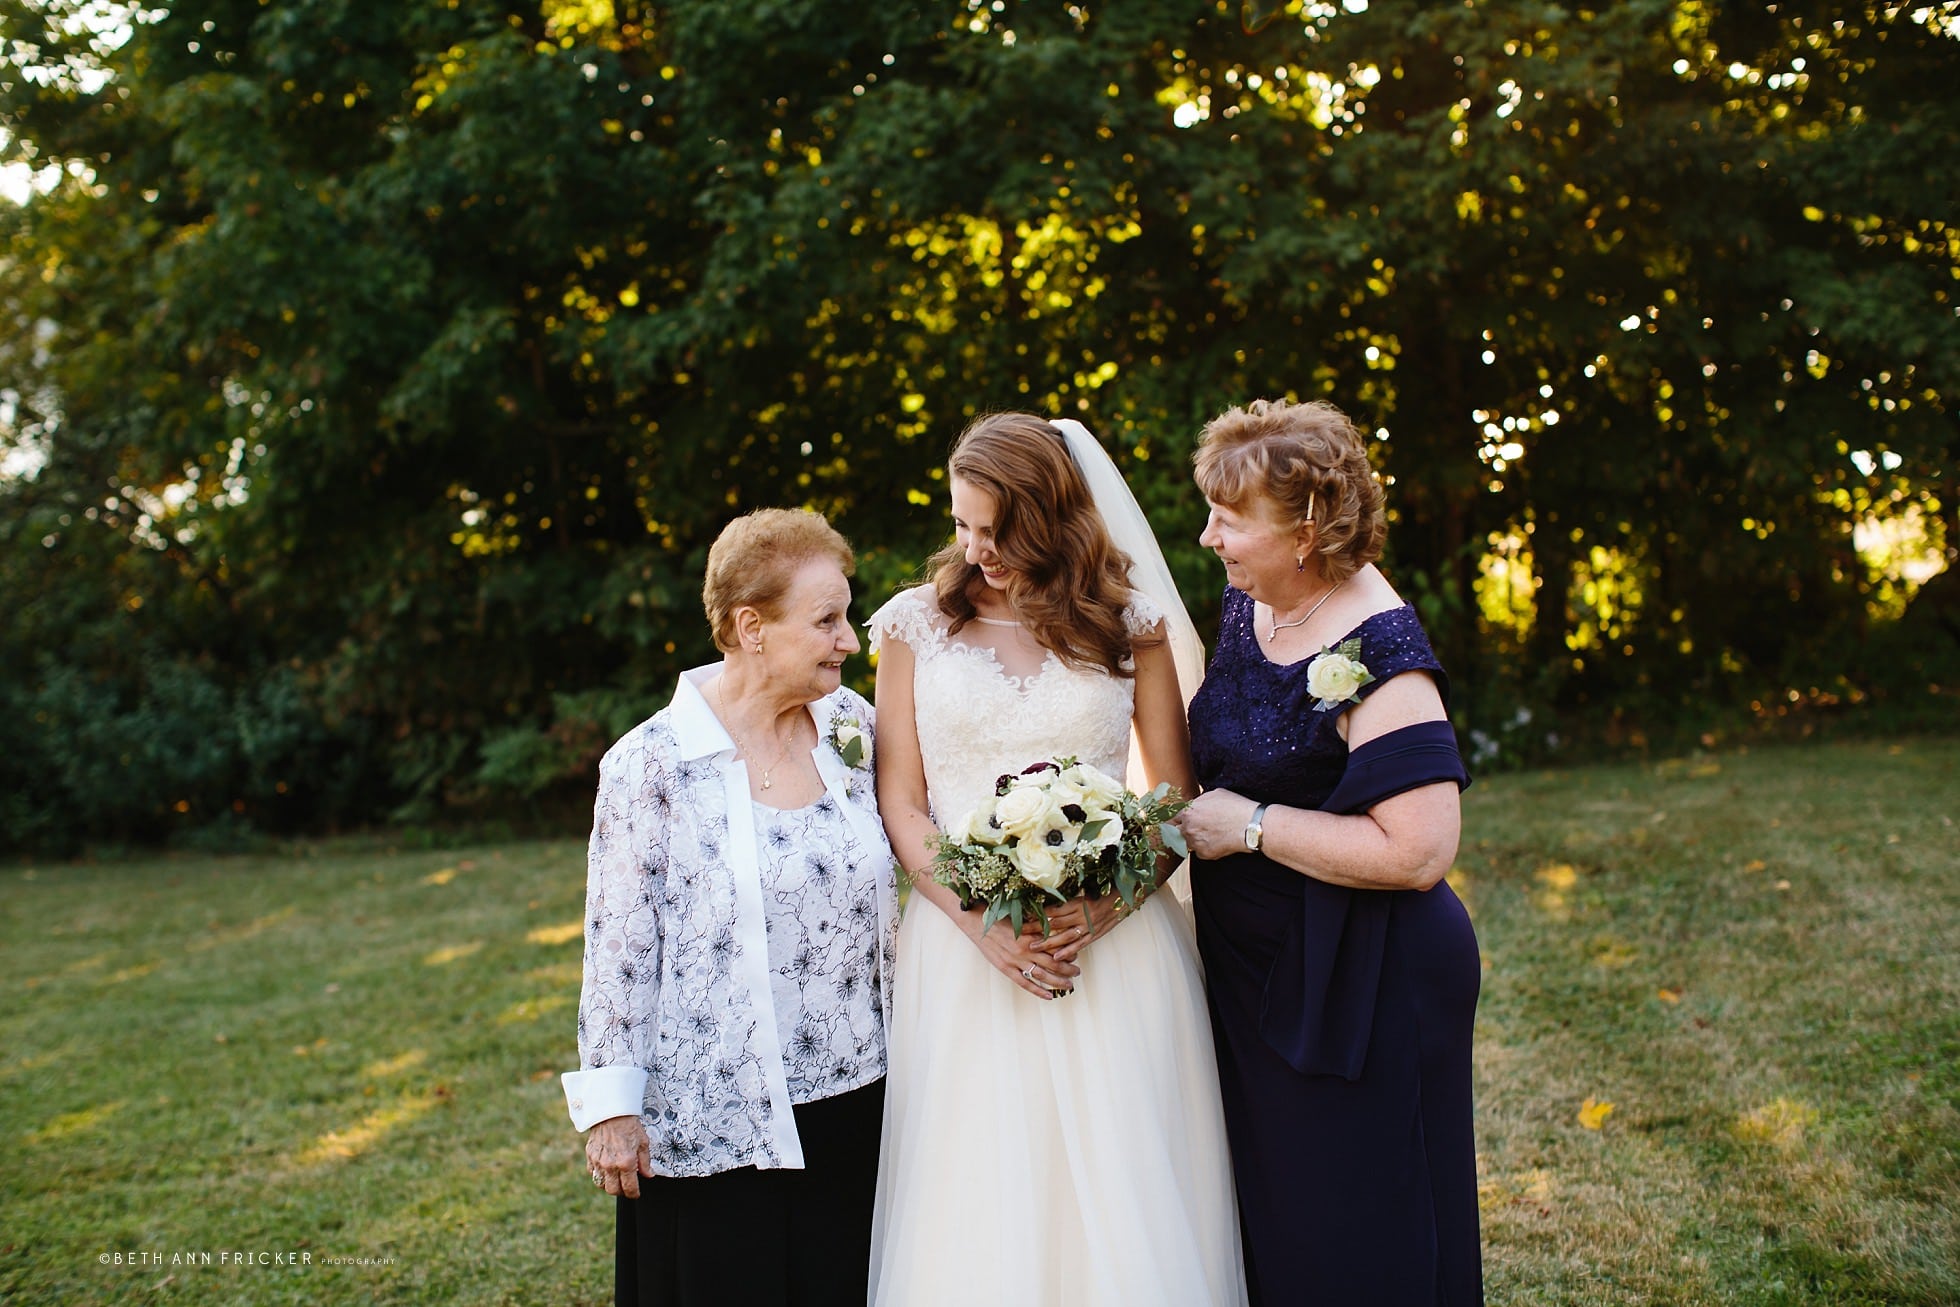 Family photos Inn on Newfound Lake Wedding Photographer